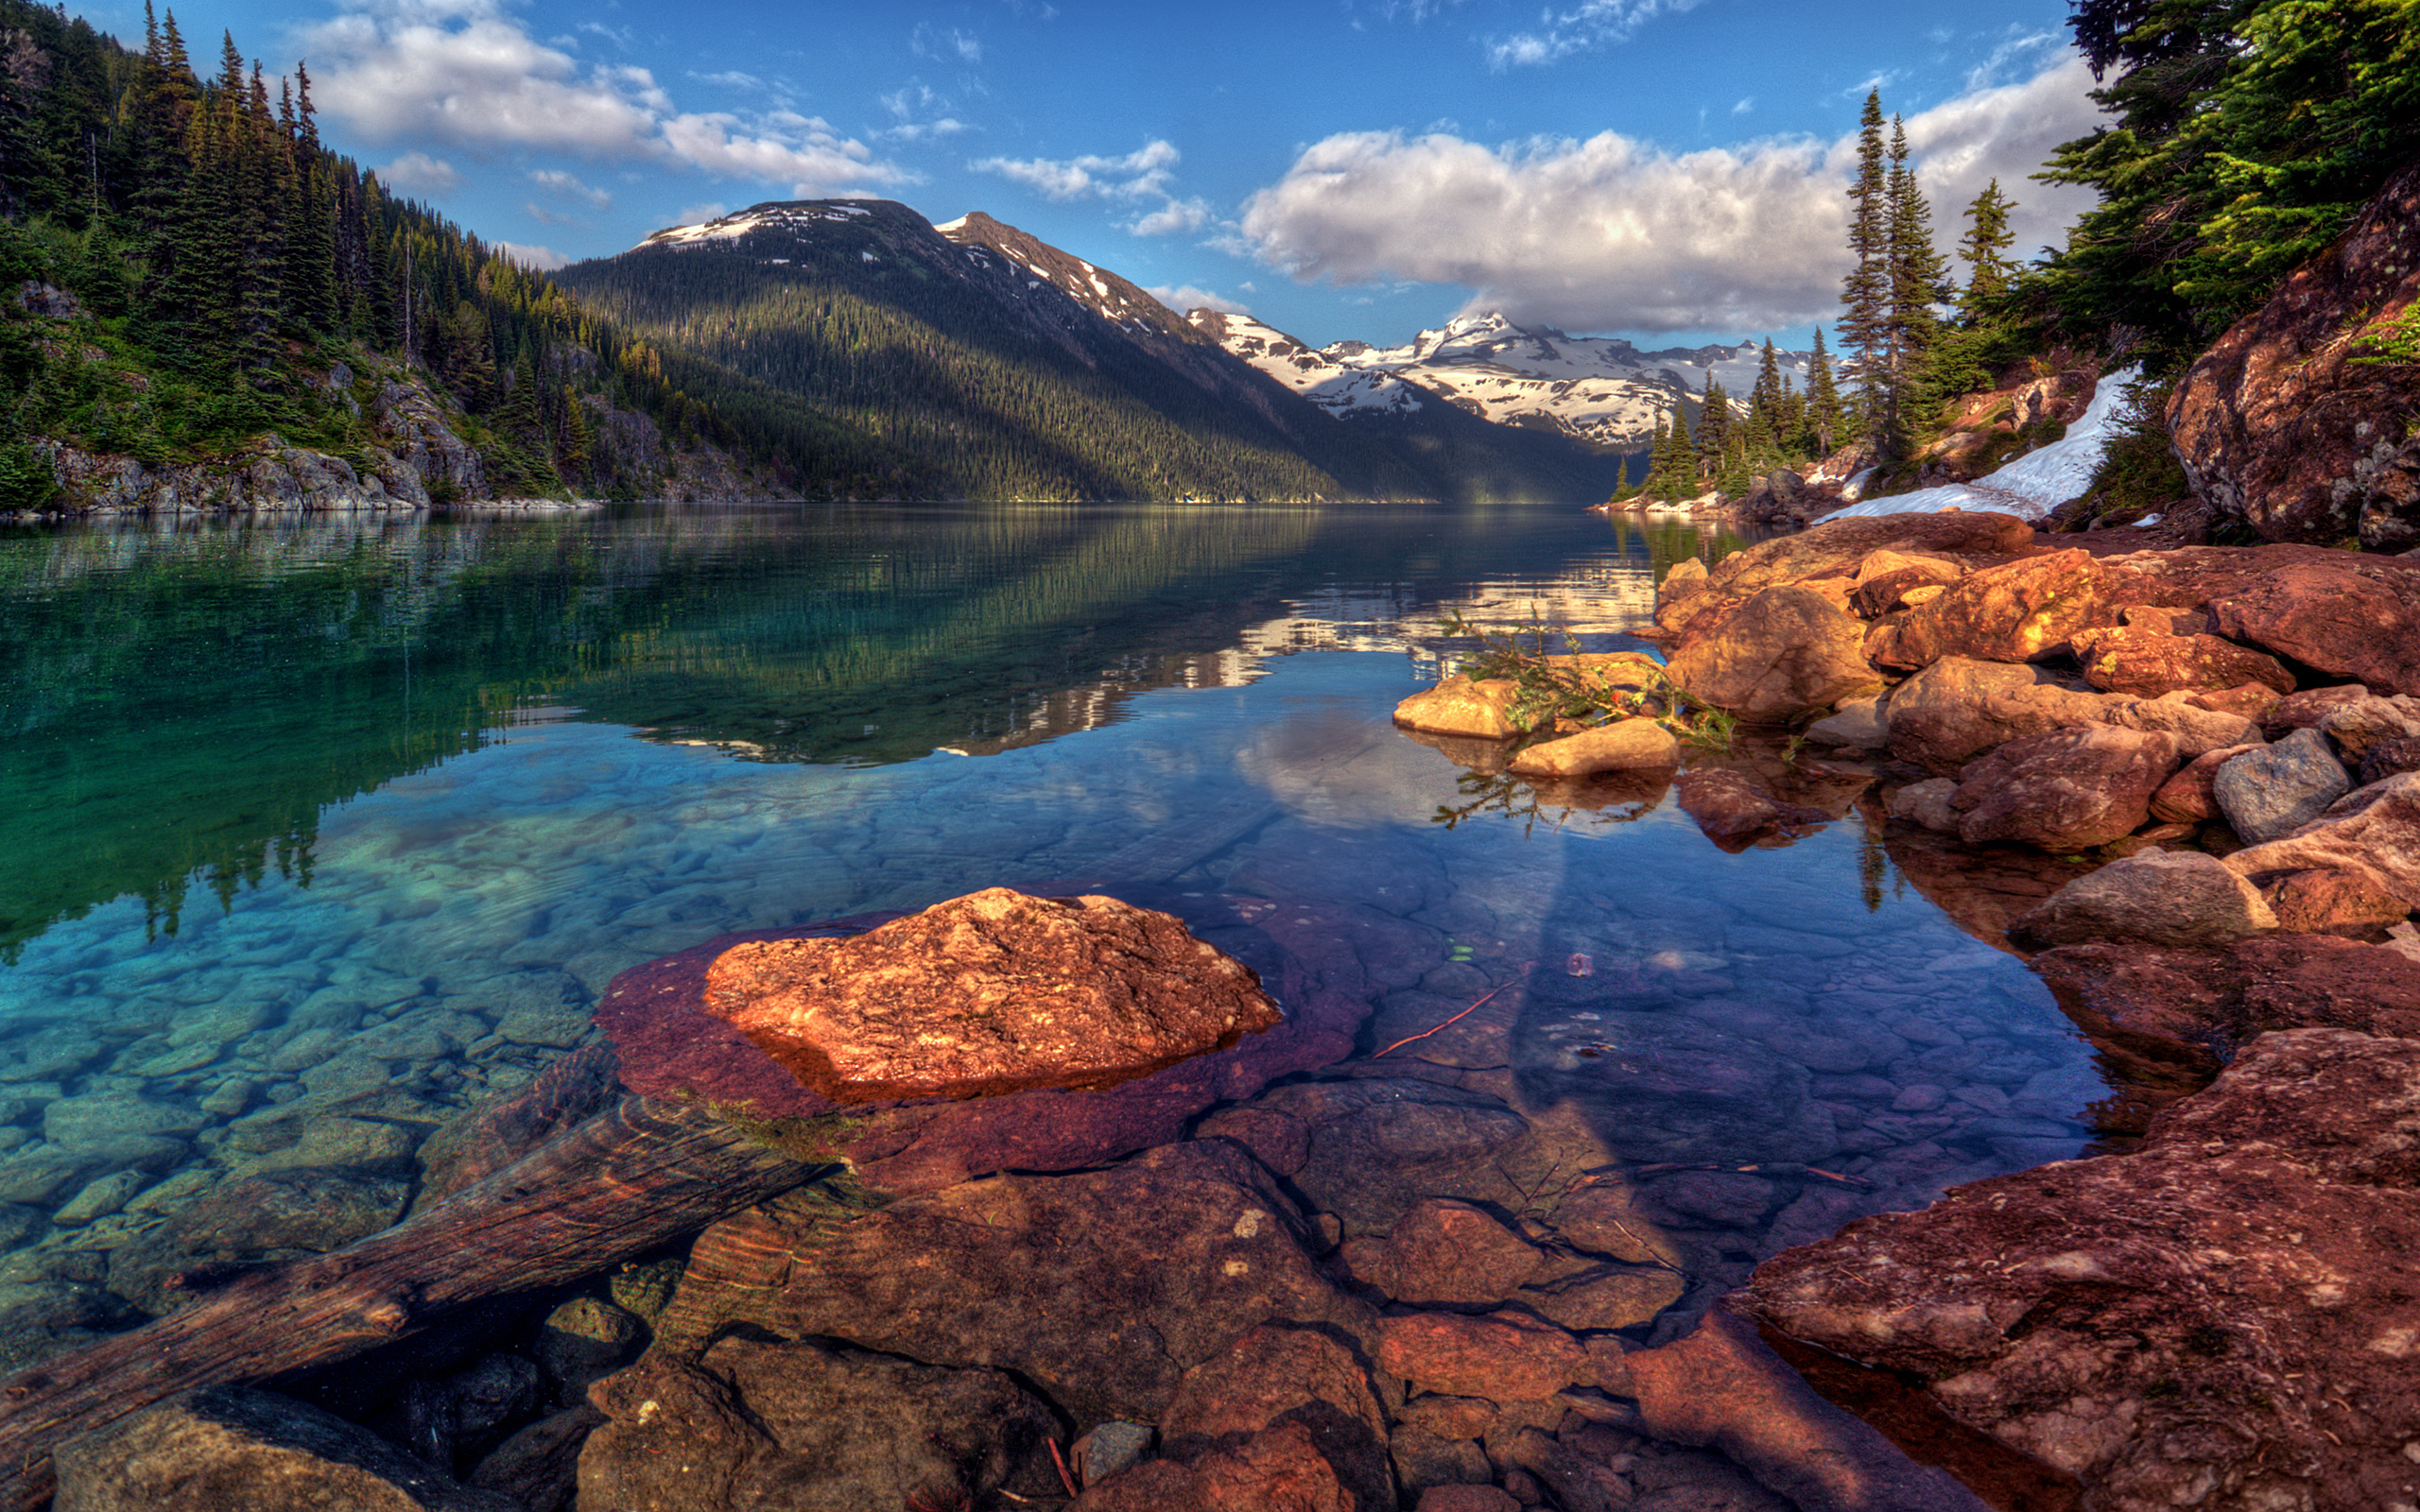 Vibrant HDR photography of a serene lake scene.